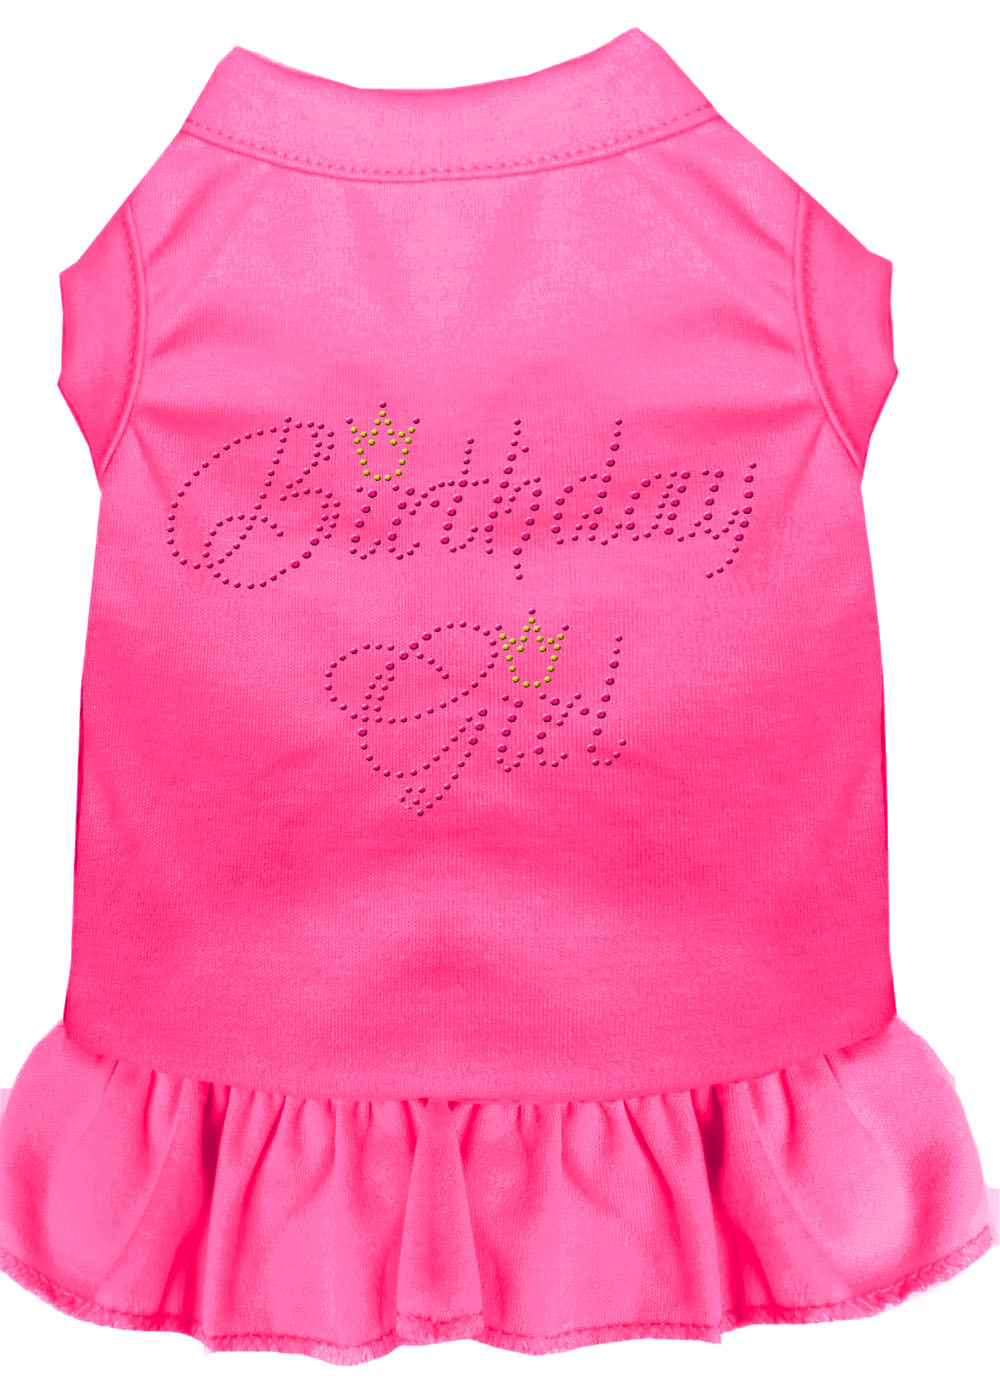 Birthday Girl Rhinestone Dress Bright Pink XS